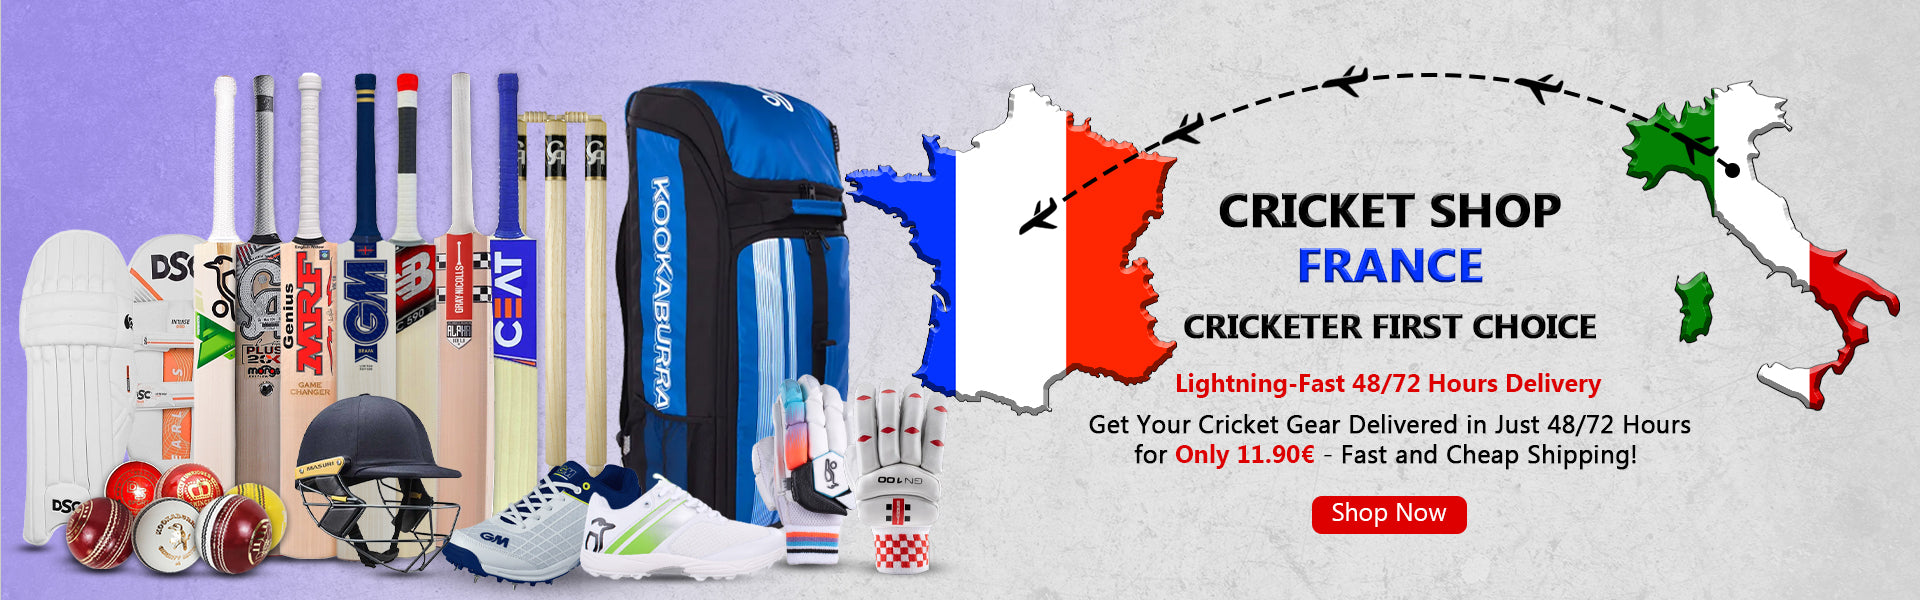 Cricket Shop France | Cricketer first Choice